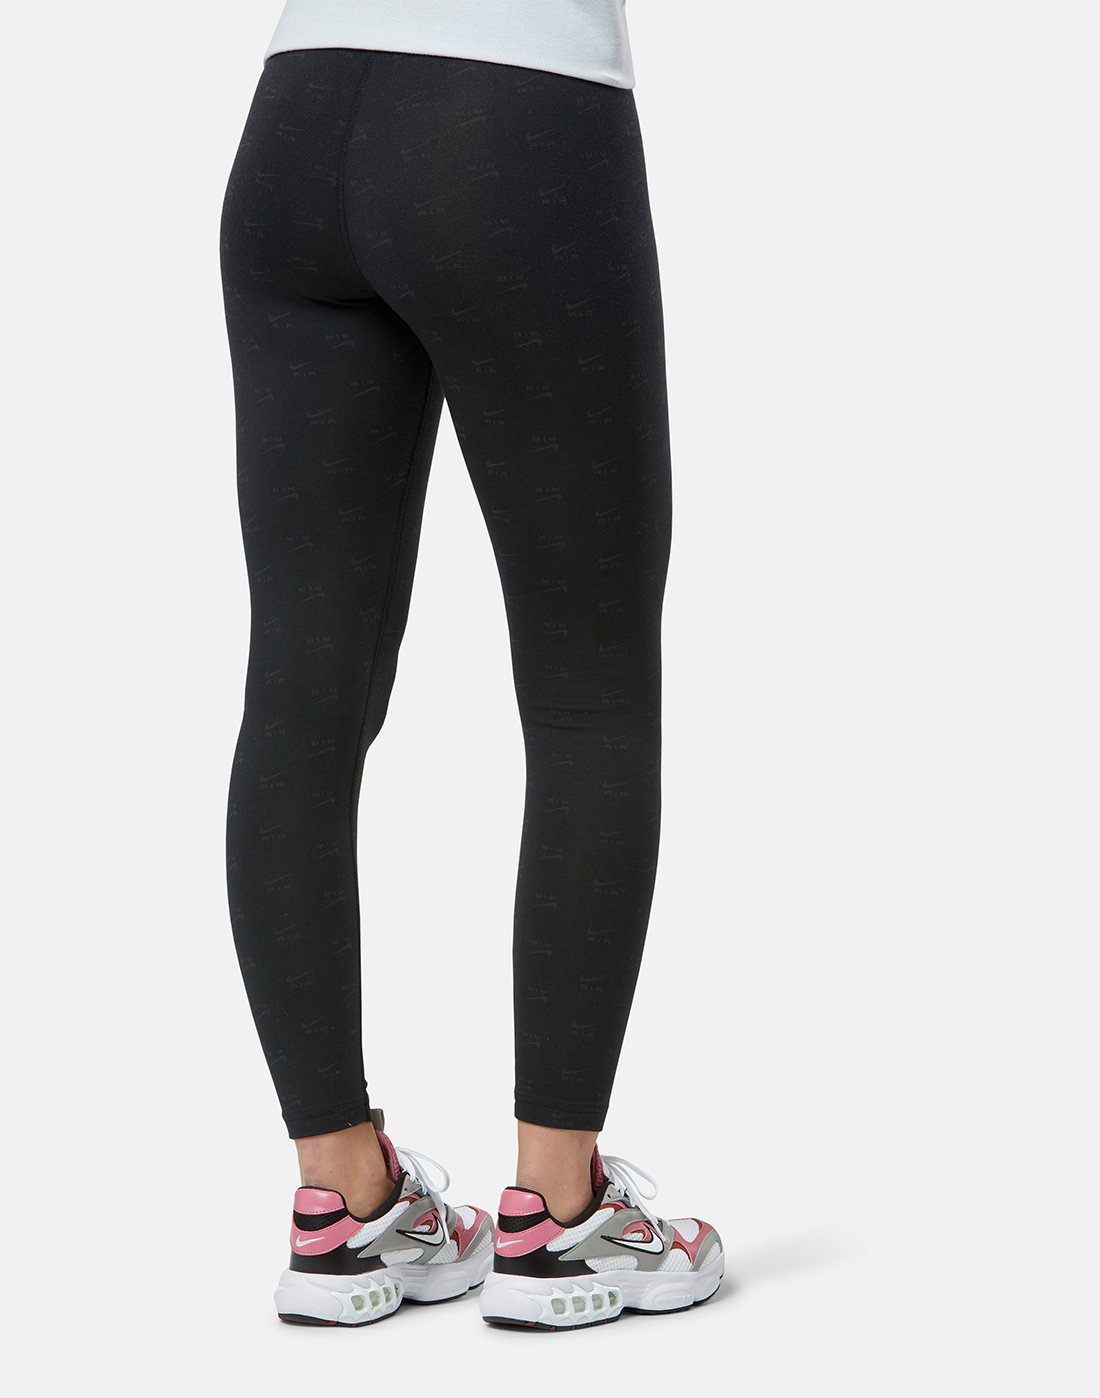 Nike Womens Air High Rise Leggings - Black